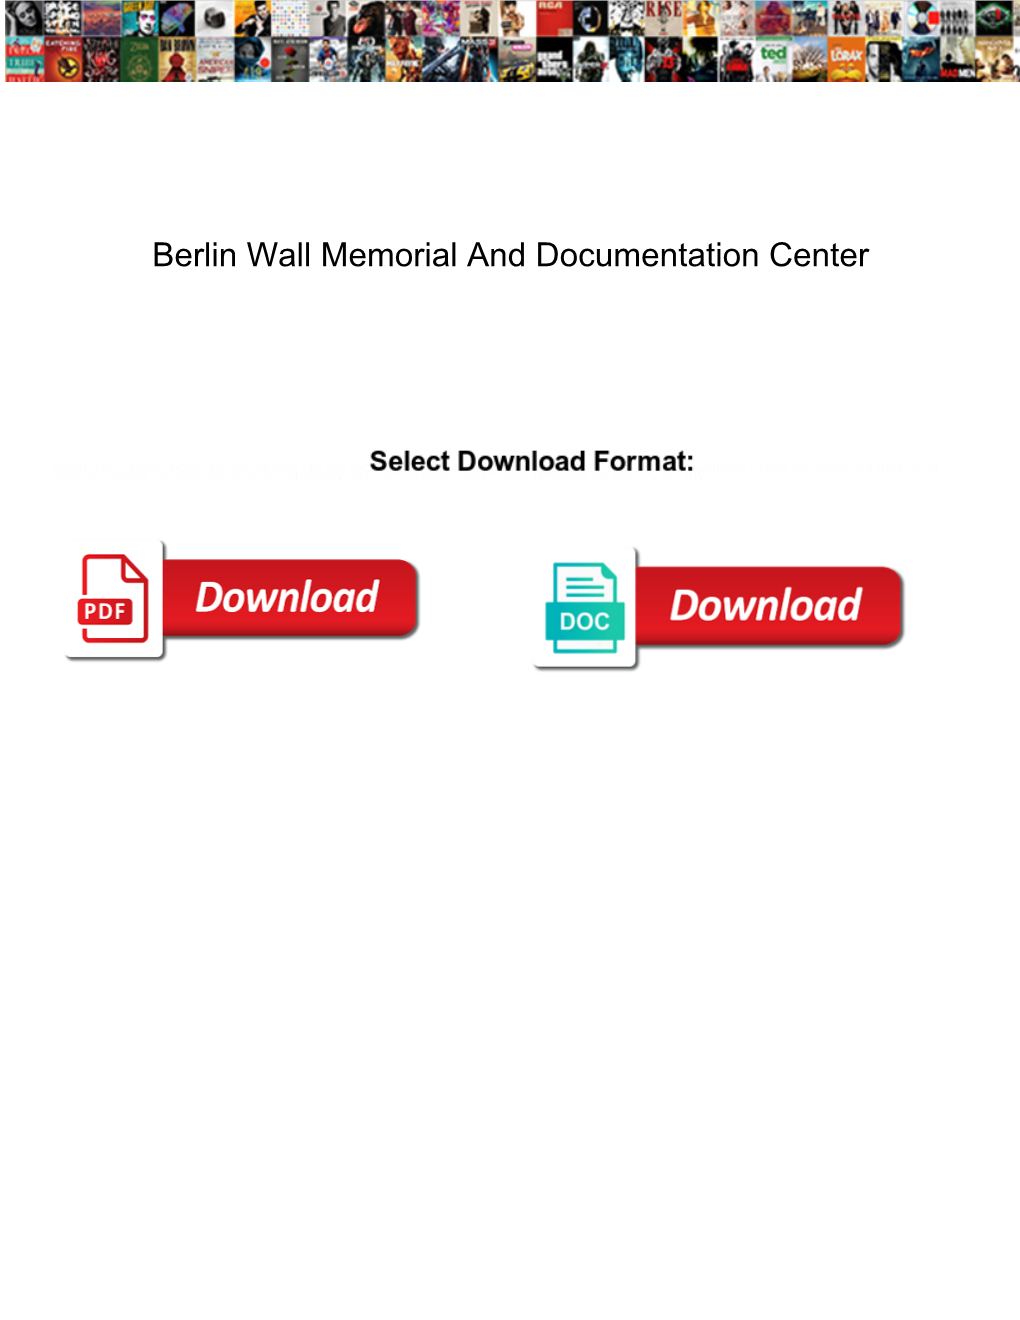 Berlin Wall Memorial and Documentation Center